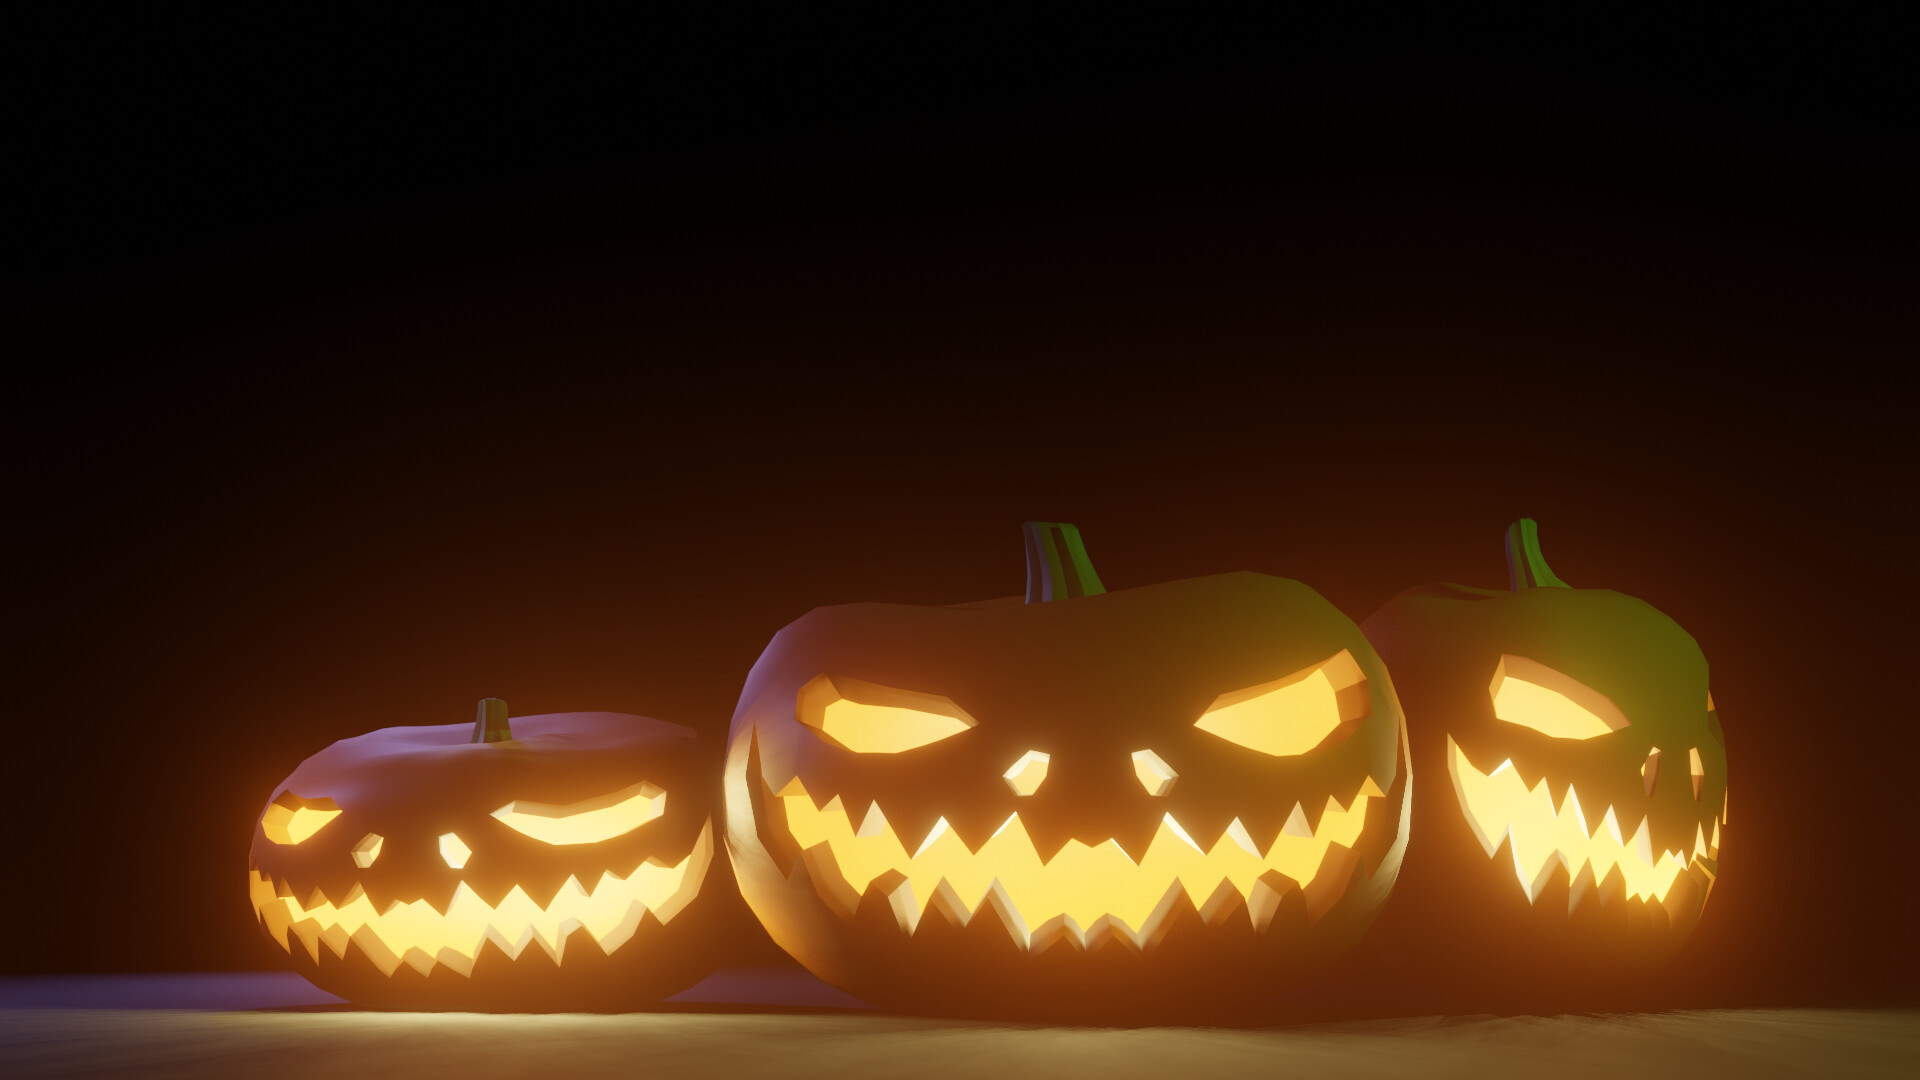 ArtStation - Spooky Pumpkins